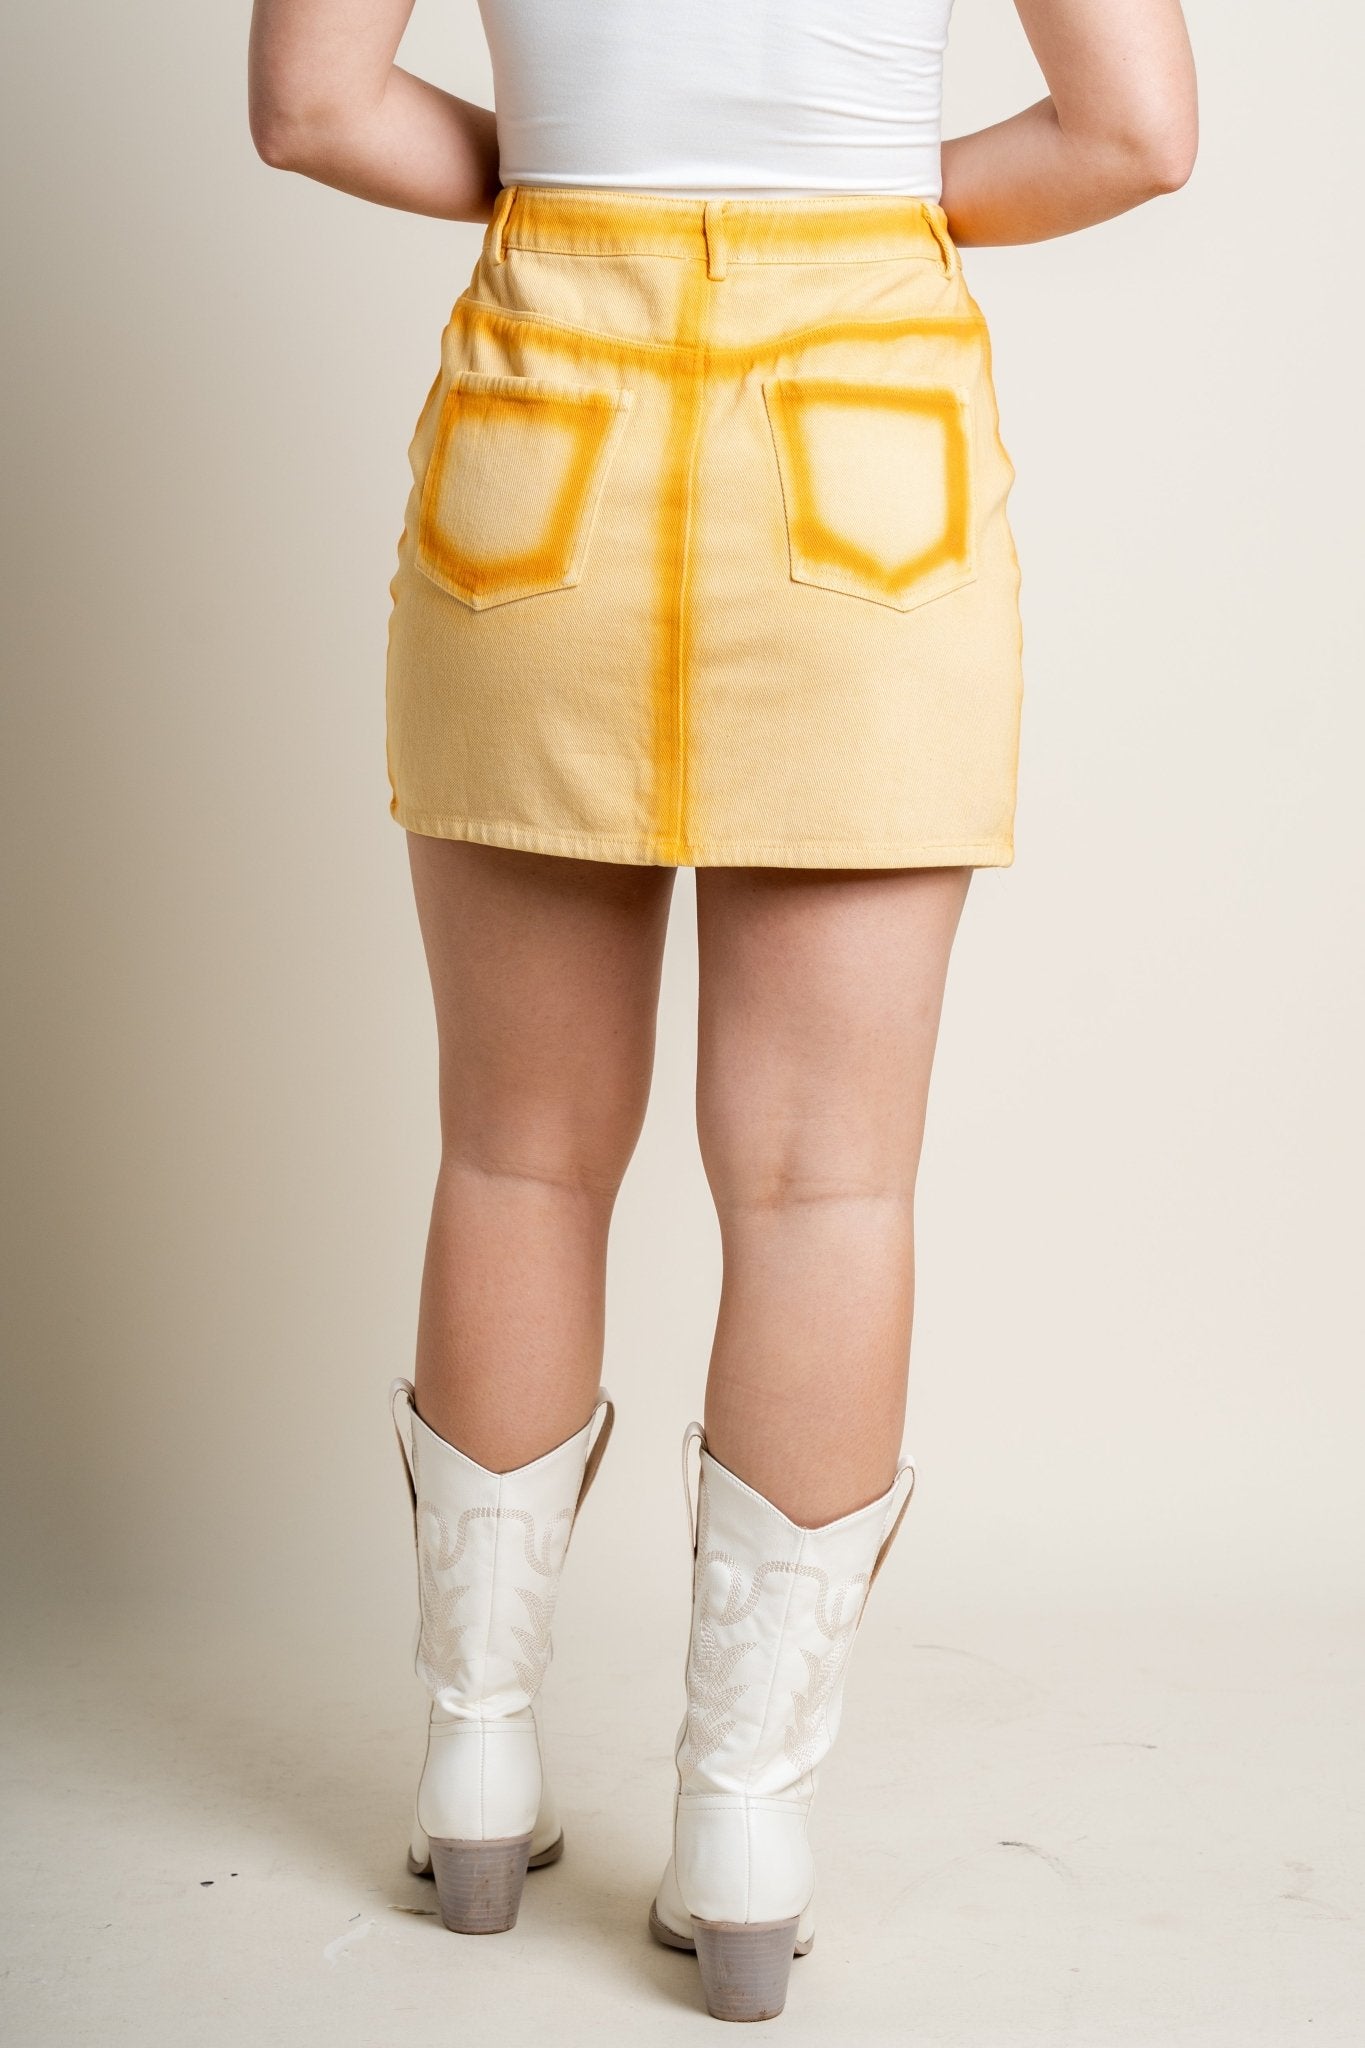 Dyed mini skirt yellow | Lush Fashion Lounge: boutique fashion skirts, affordable boutique skirts, cute affordable skirts